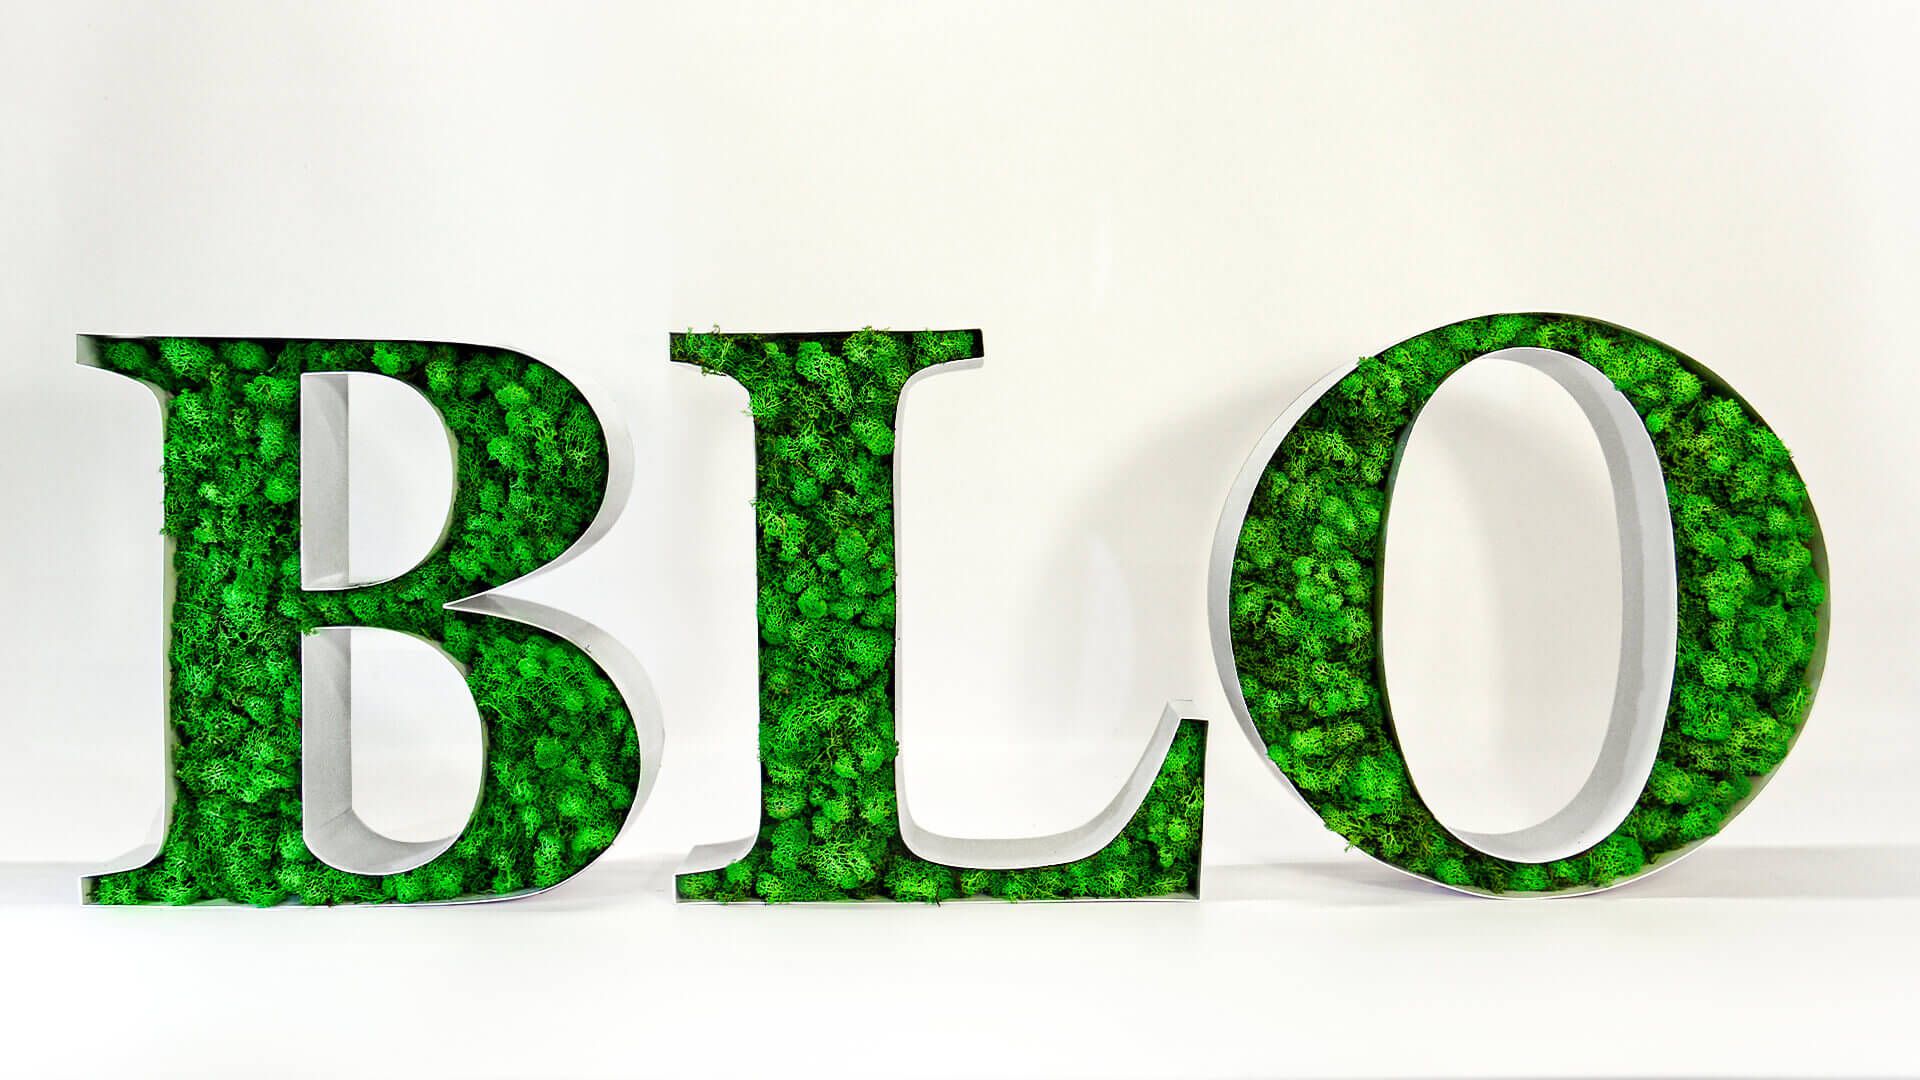 BLO litery dekoracyjne - Litery dekoracyjne BLO, wypełnione mchem.